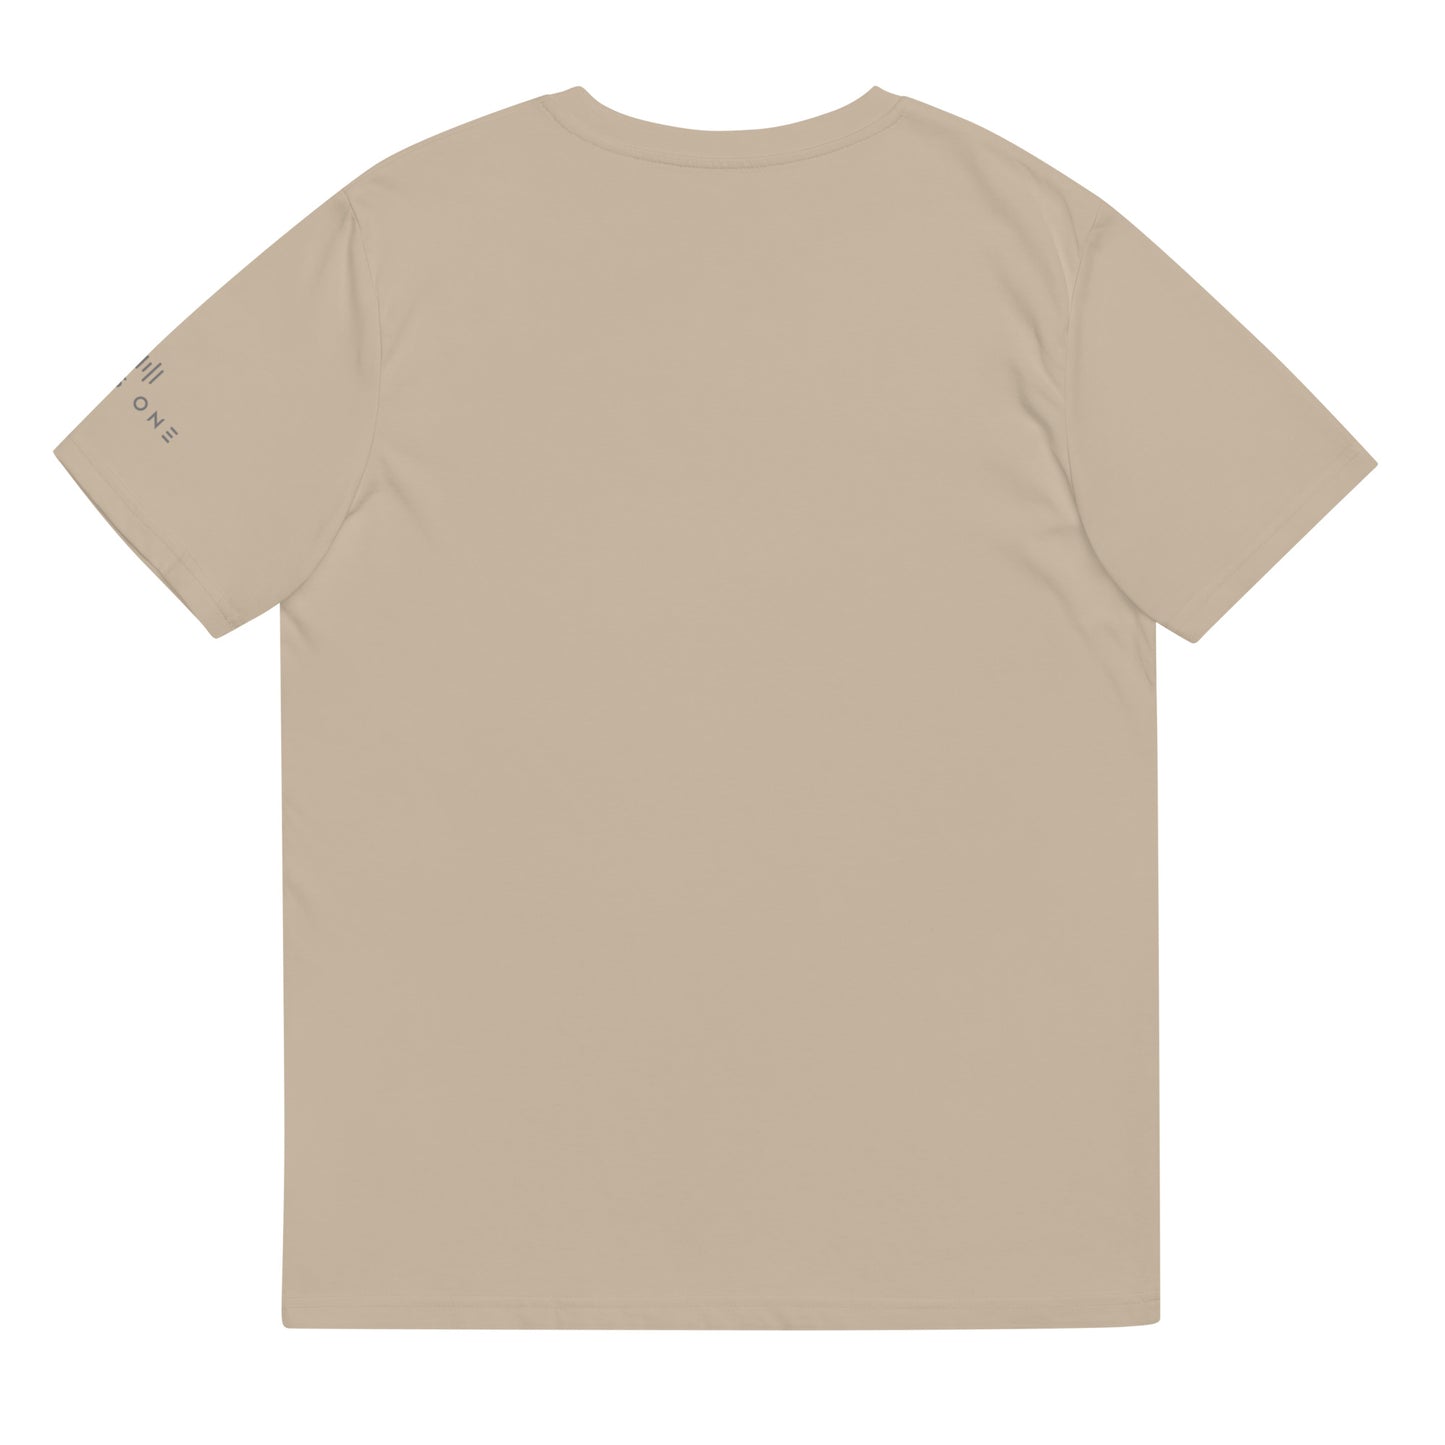 RAW Kitty (v1) Unisex organic cotton t-shirt